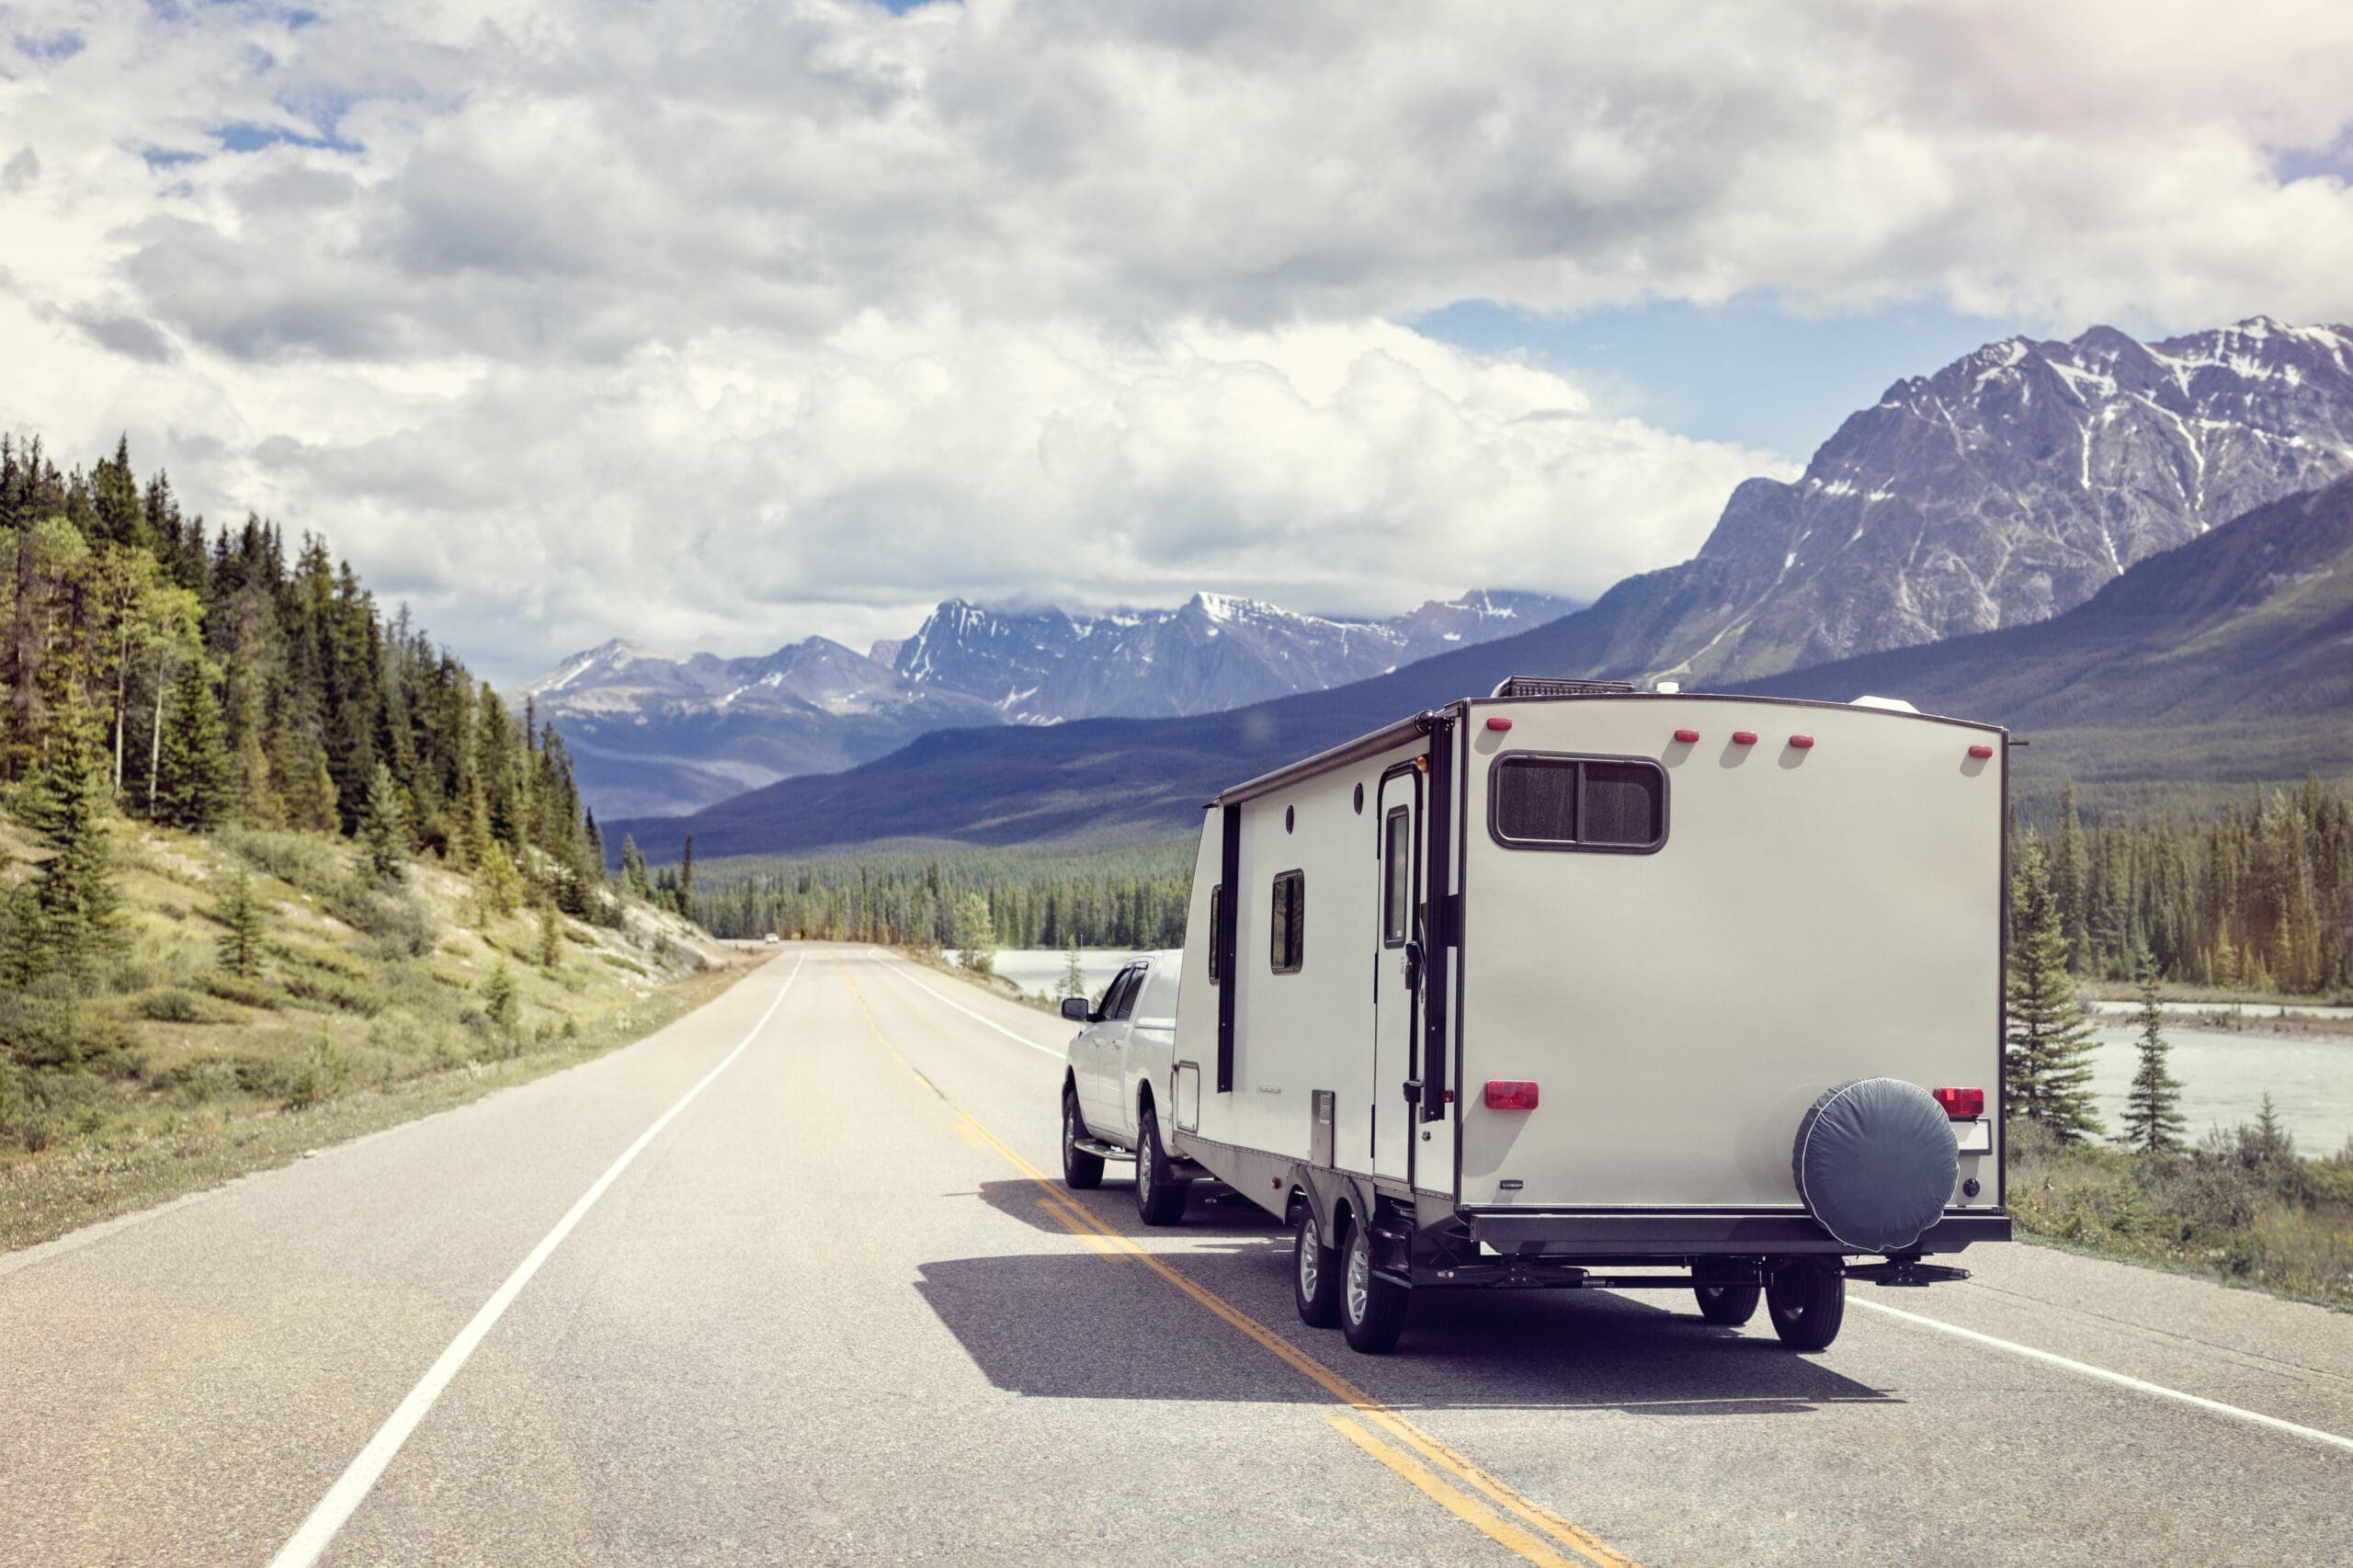 Caravan,Or,Recreational,Vehicle,Motor,Home,Trailer,On,A,Mountain